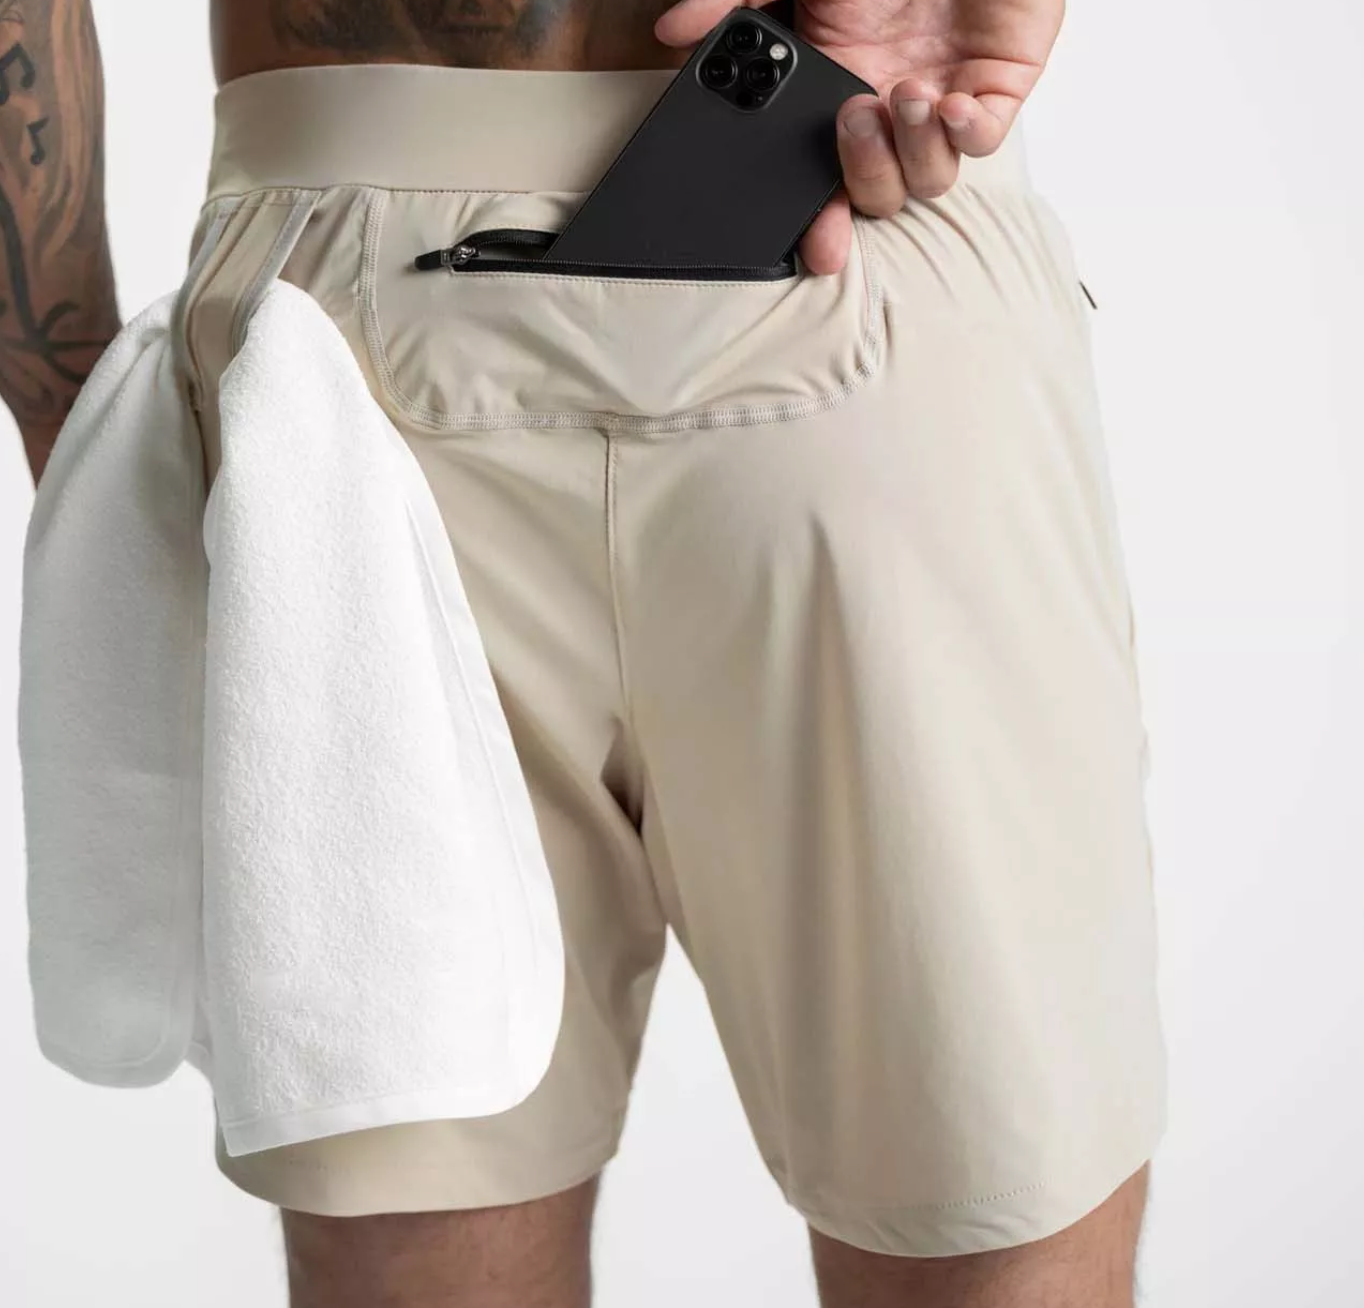 Honcho shorts (Khaki)